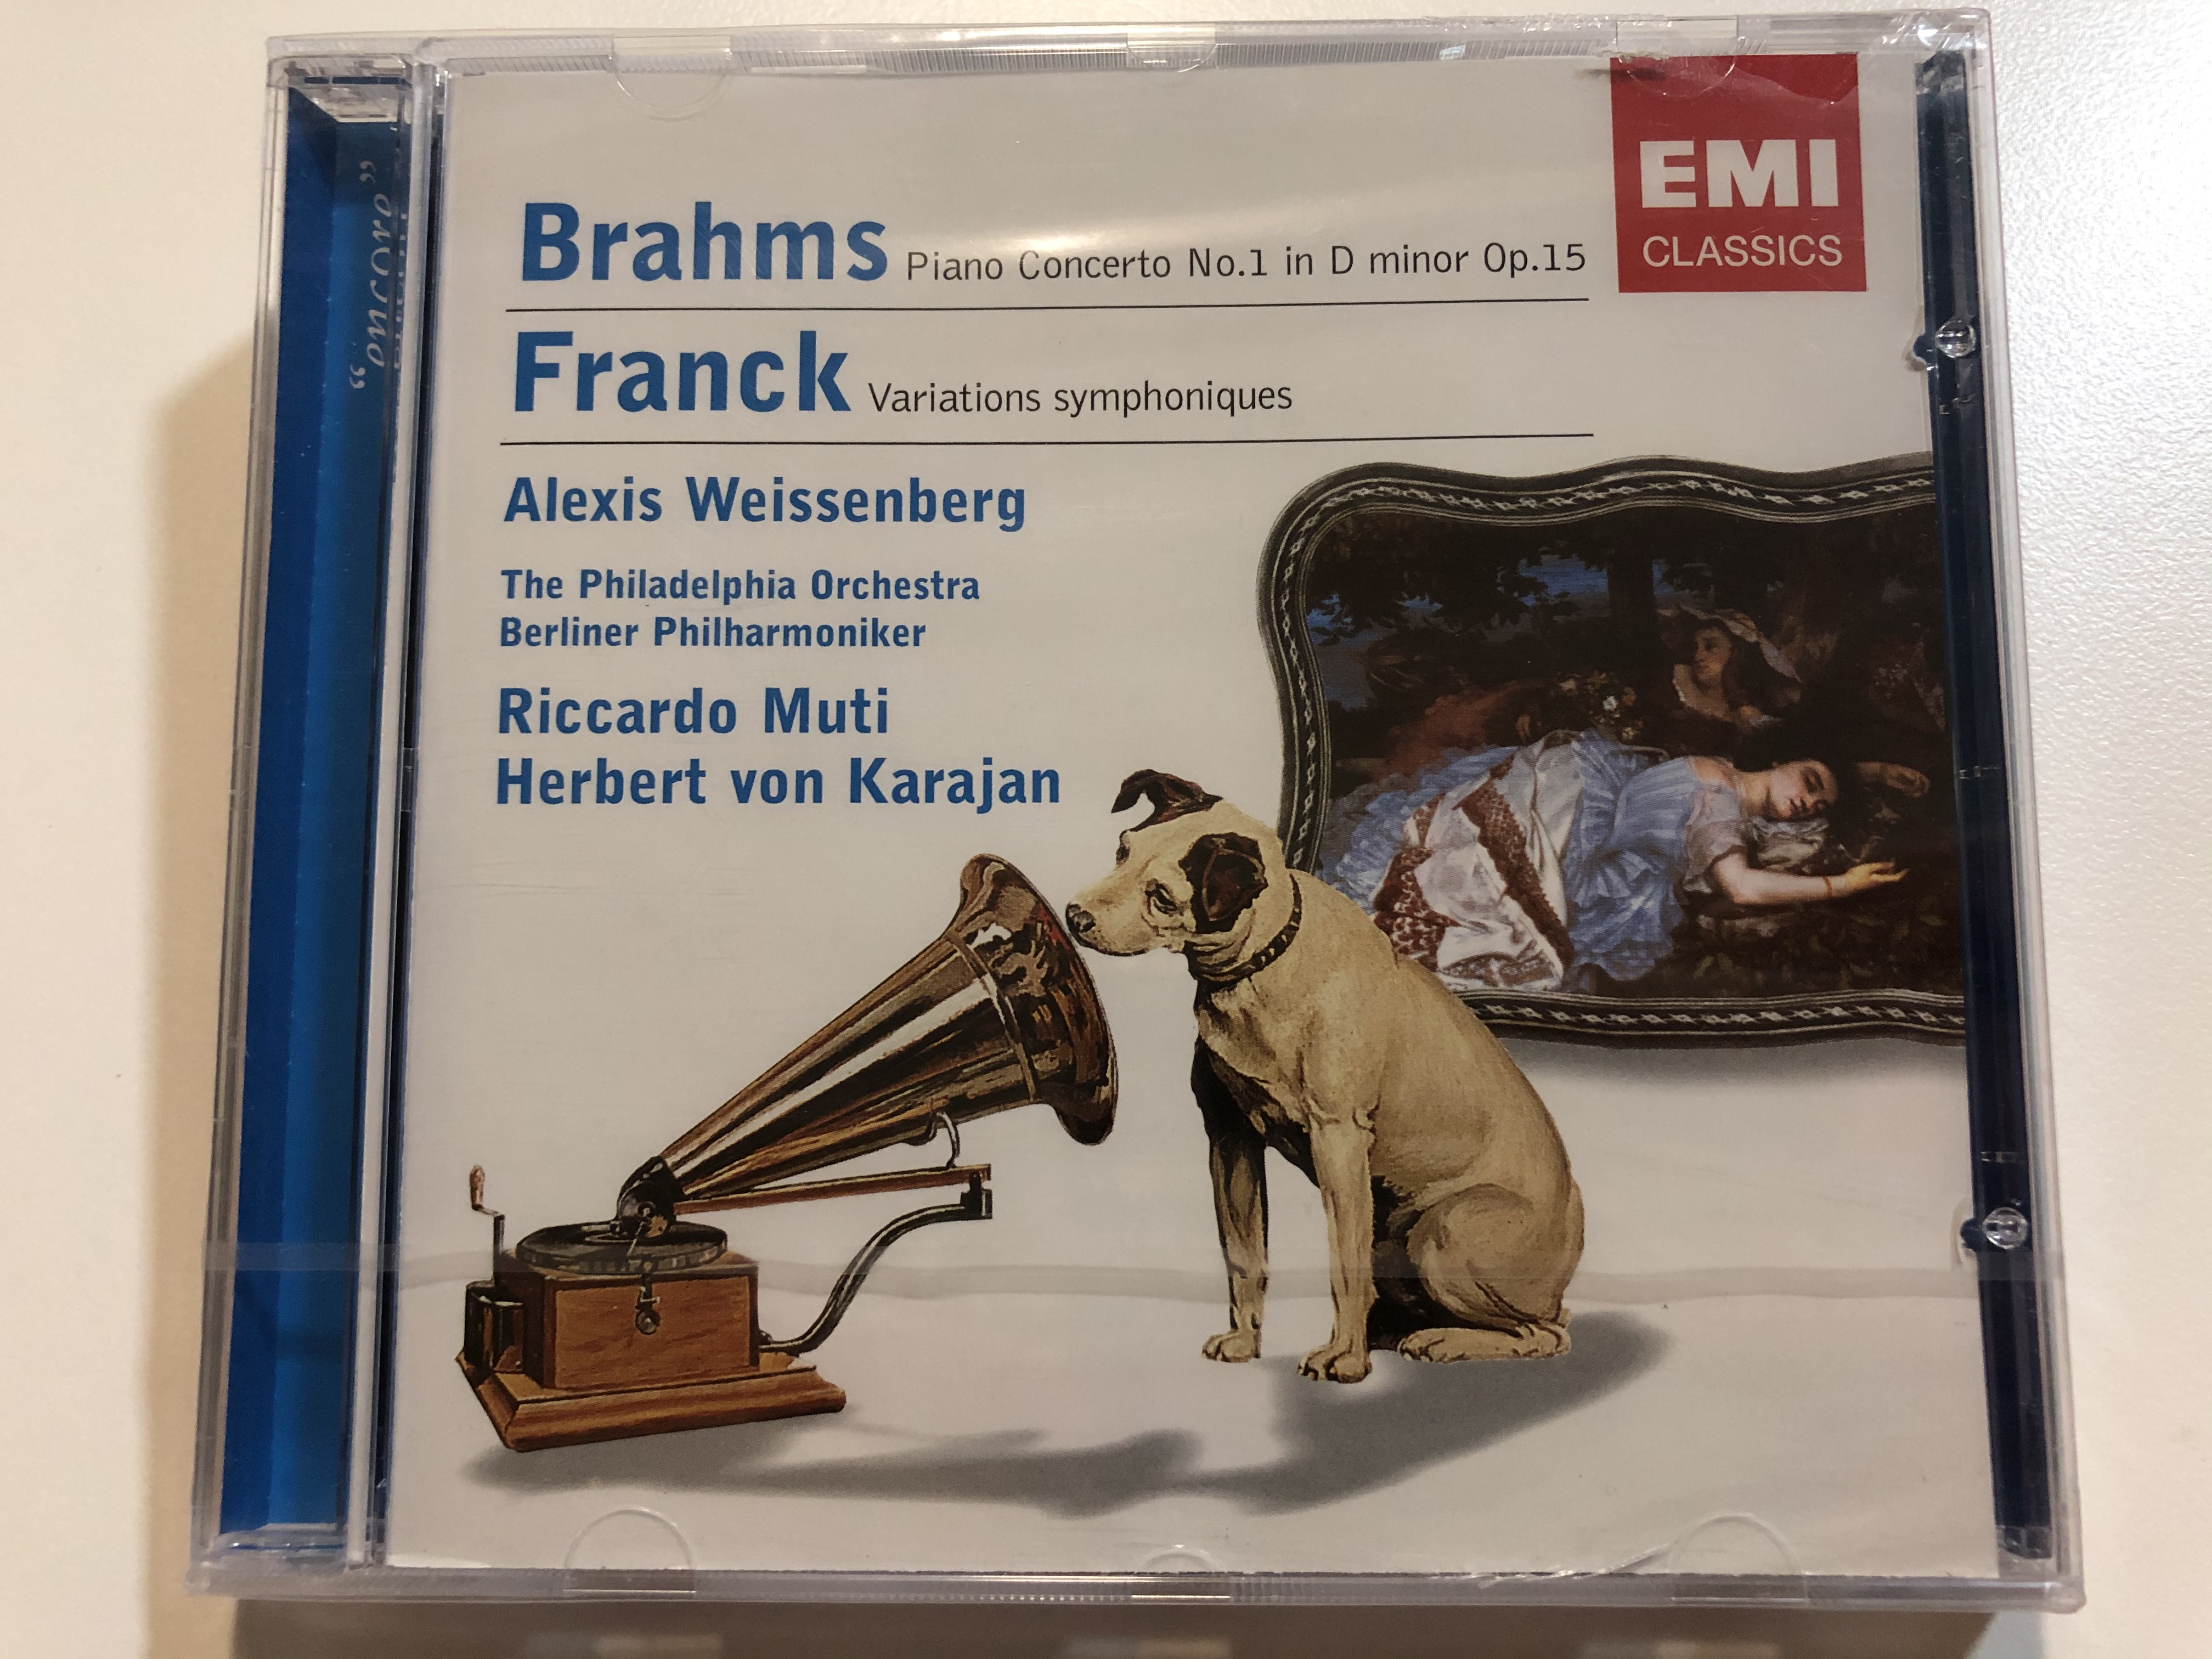 brahms-piano-concerto-no.1-in-d-minor-op.-15-franck-variatons-symphoniques-alexis-weissenberg-the-philadelphia-orchestra-berliner-philharmoniker-riccardo-muti-herbert-von-karajan-emi-a-1-.jpg